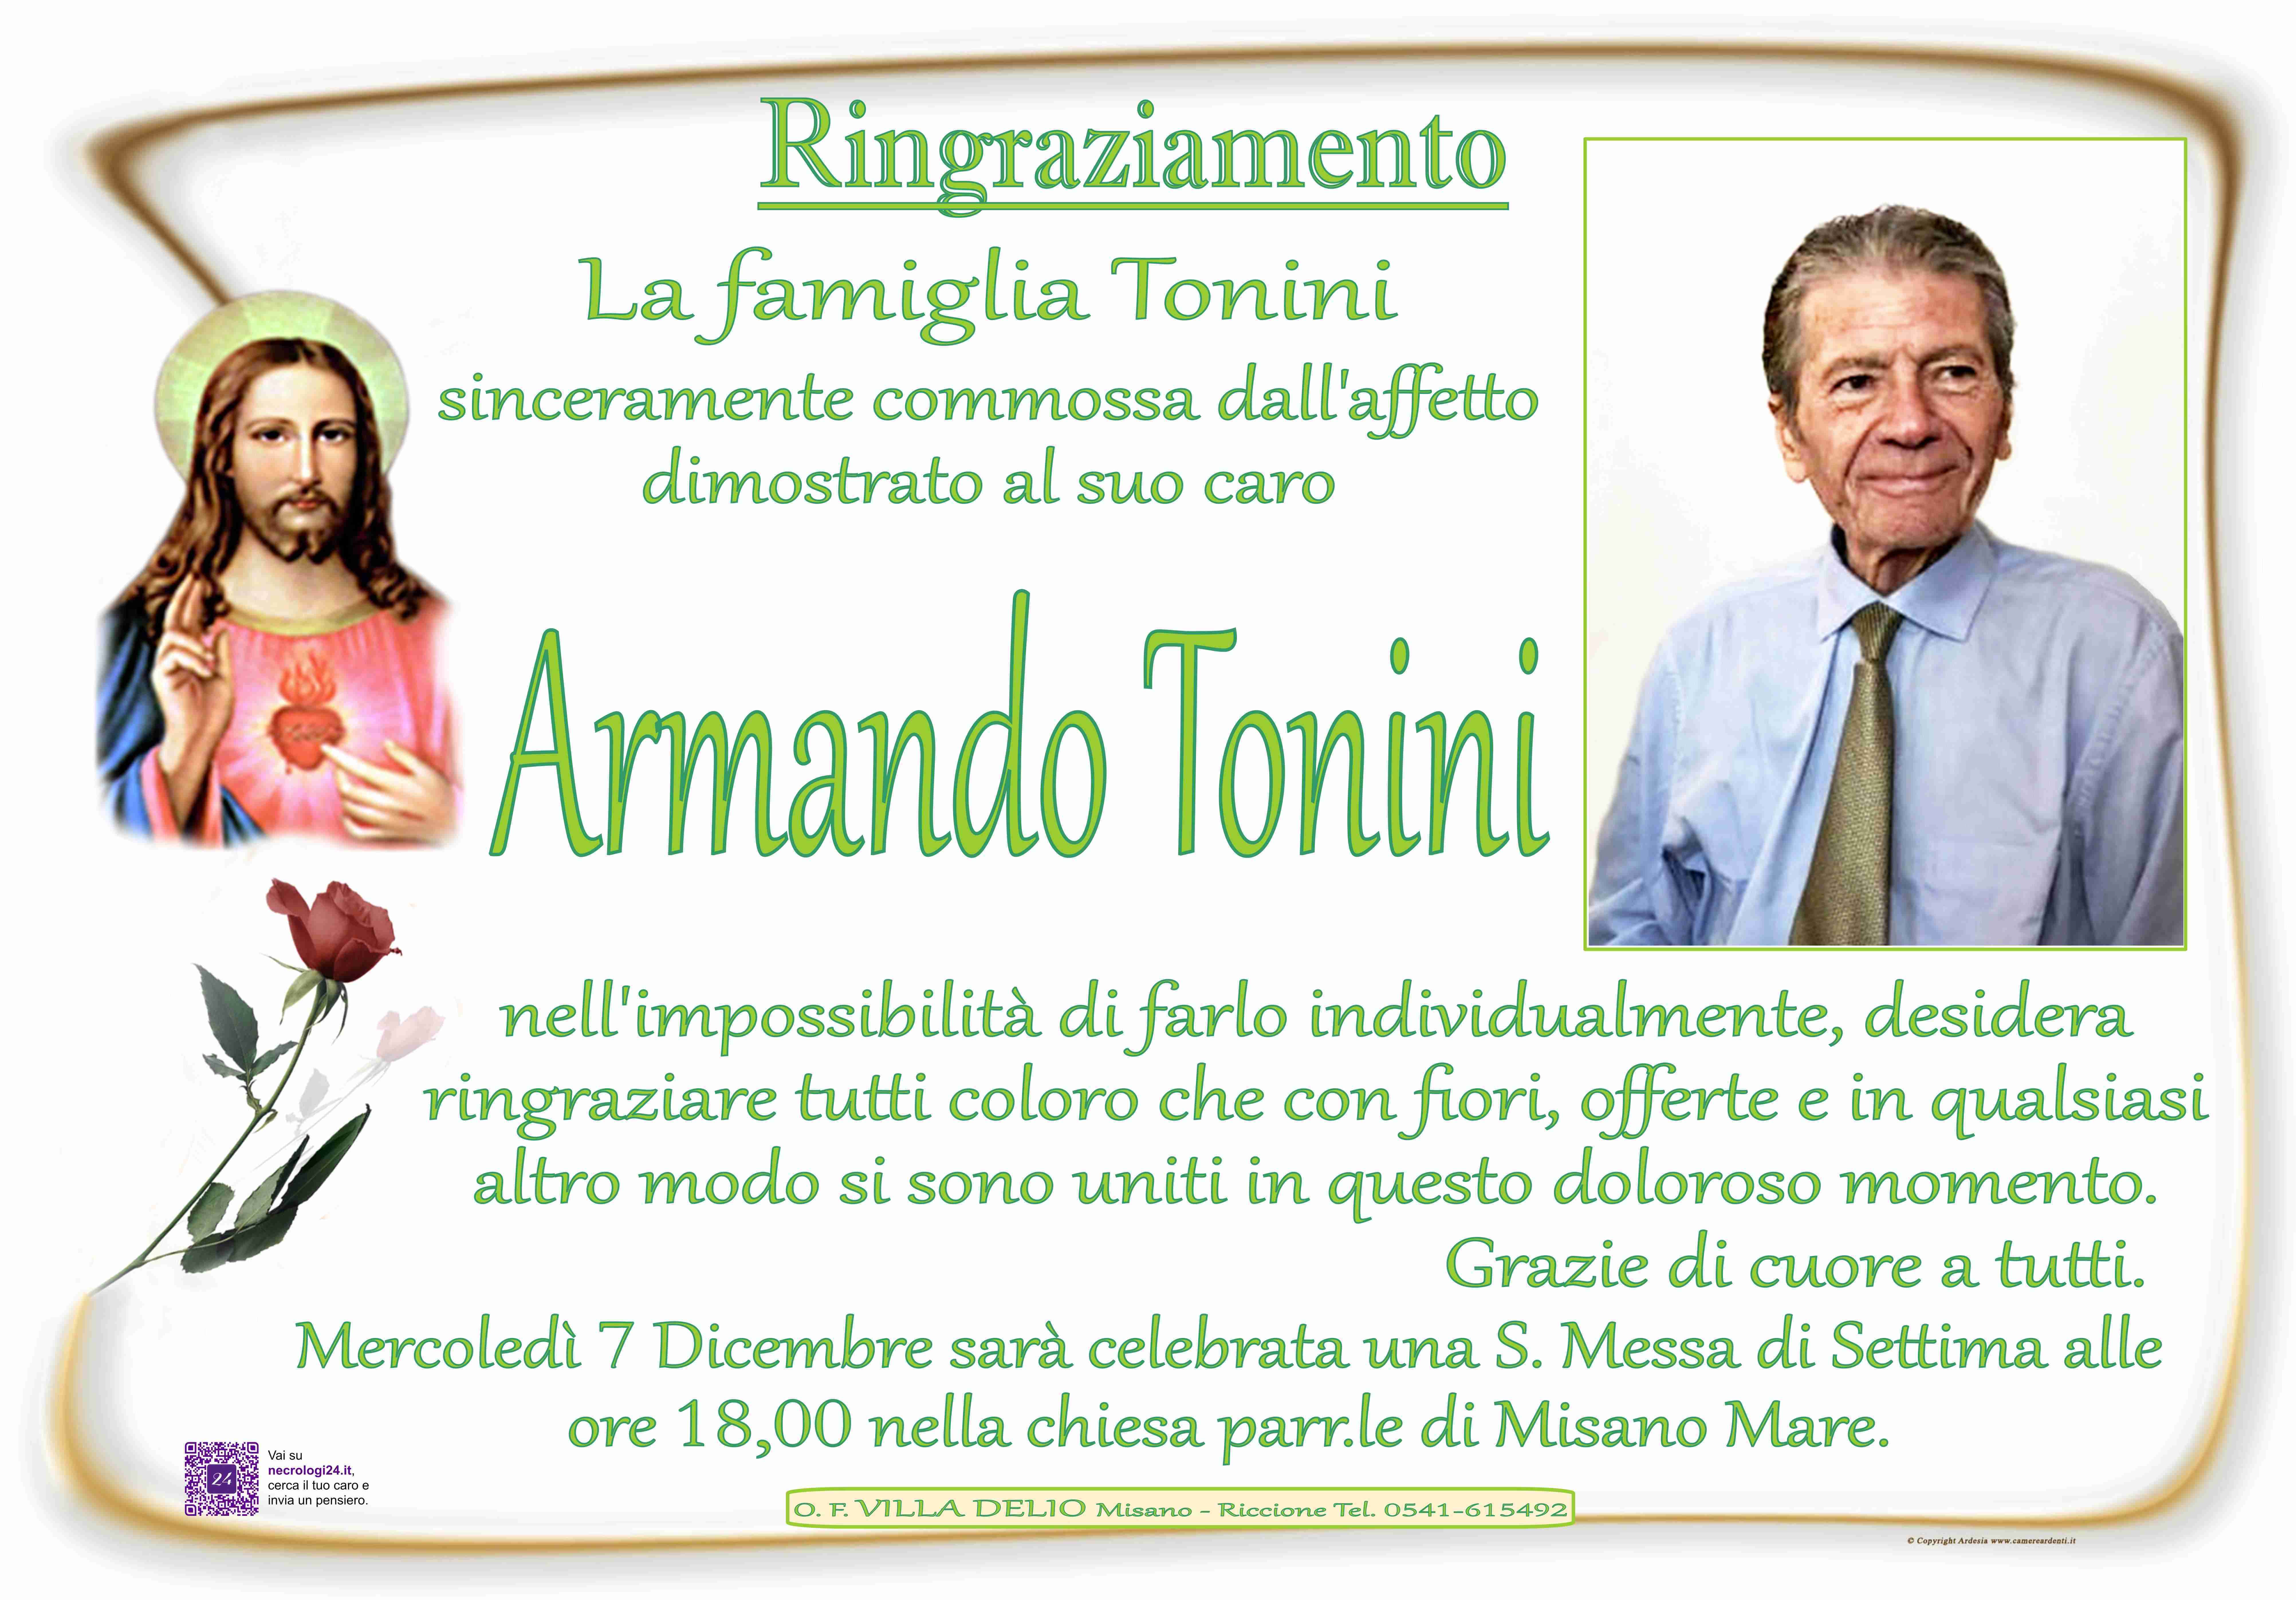 Armando Tonini